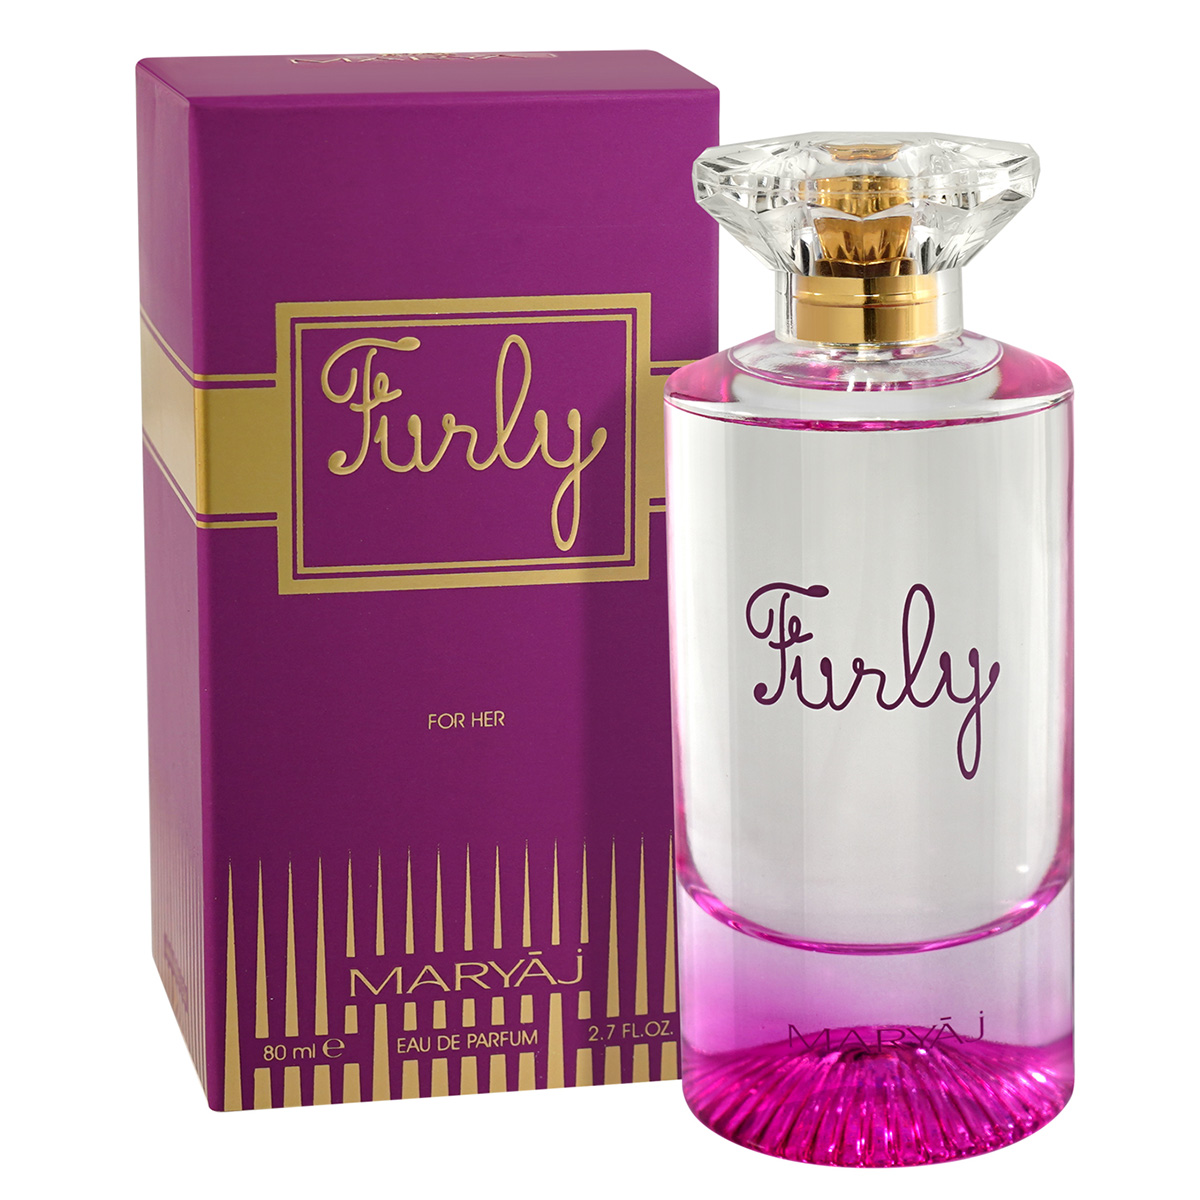 Maryaj Furly EDP Eau De Parfum, 80ml